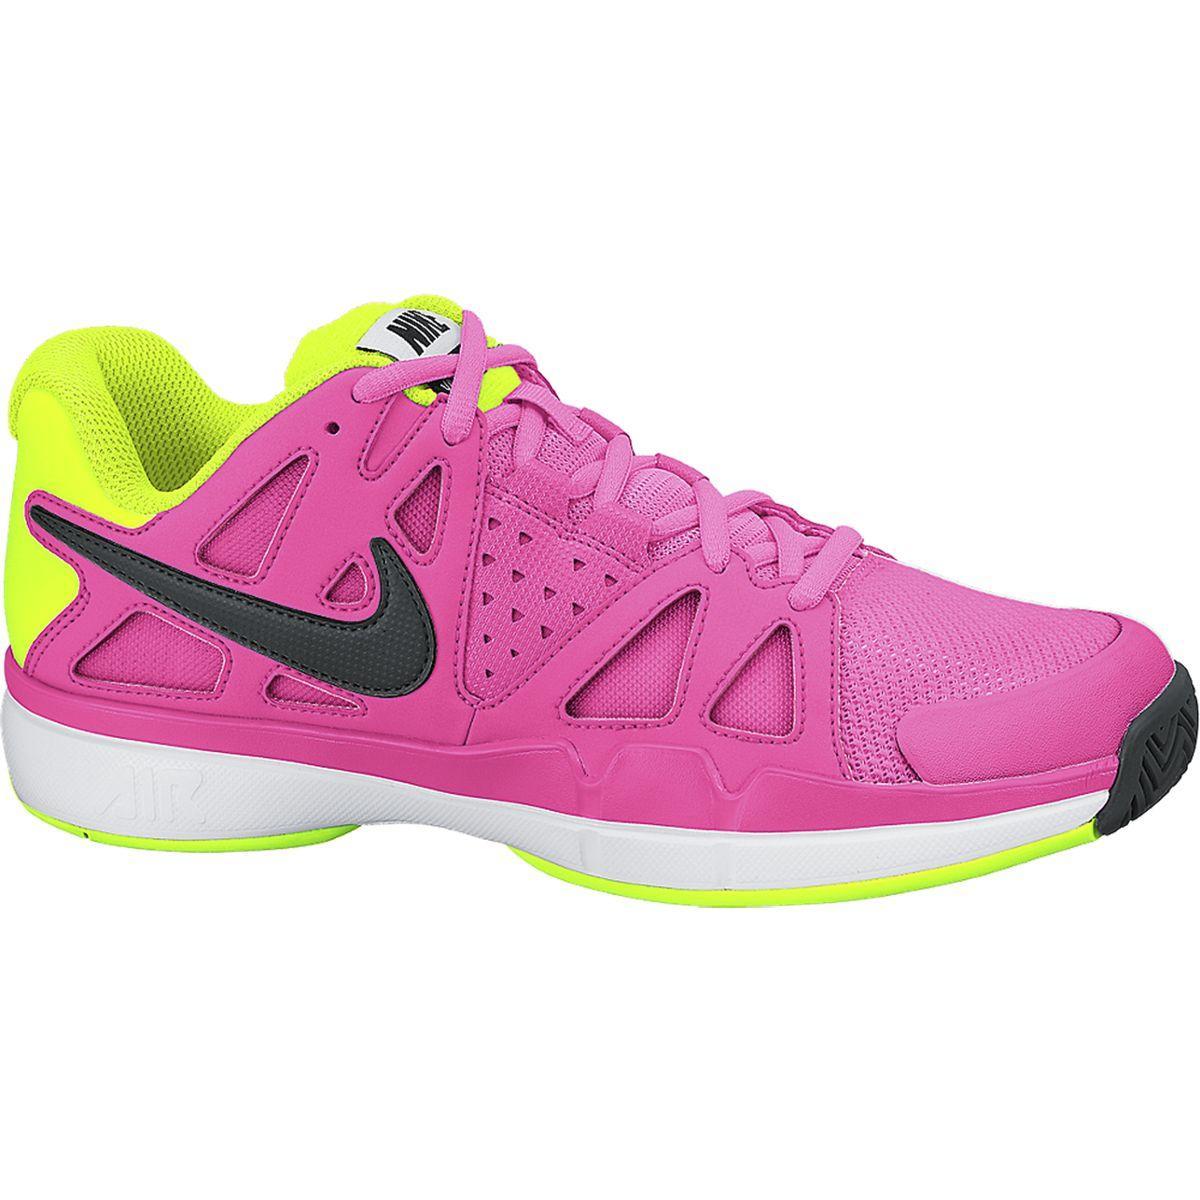 Nike Womens Air Vapor Advantage Tennis Shoes - Pink Powder/Black/Volt ...